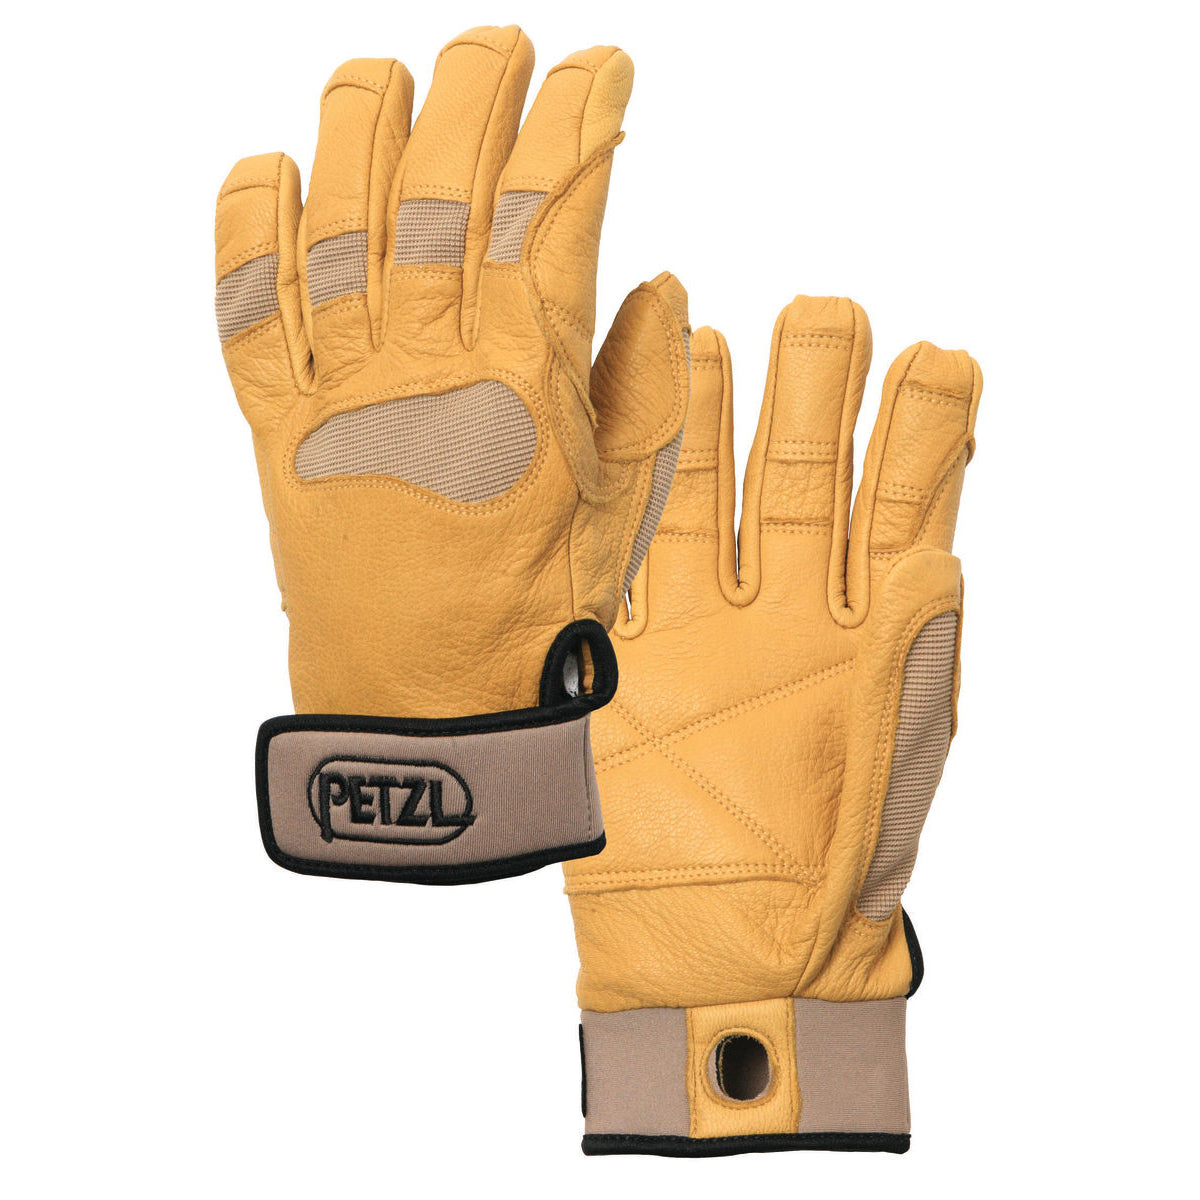 the petzl cordex plus glove, in tan